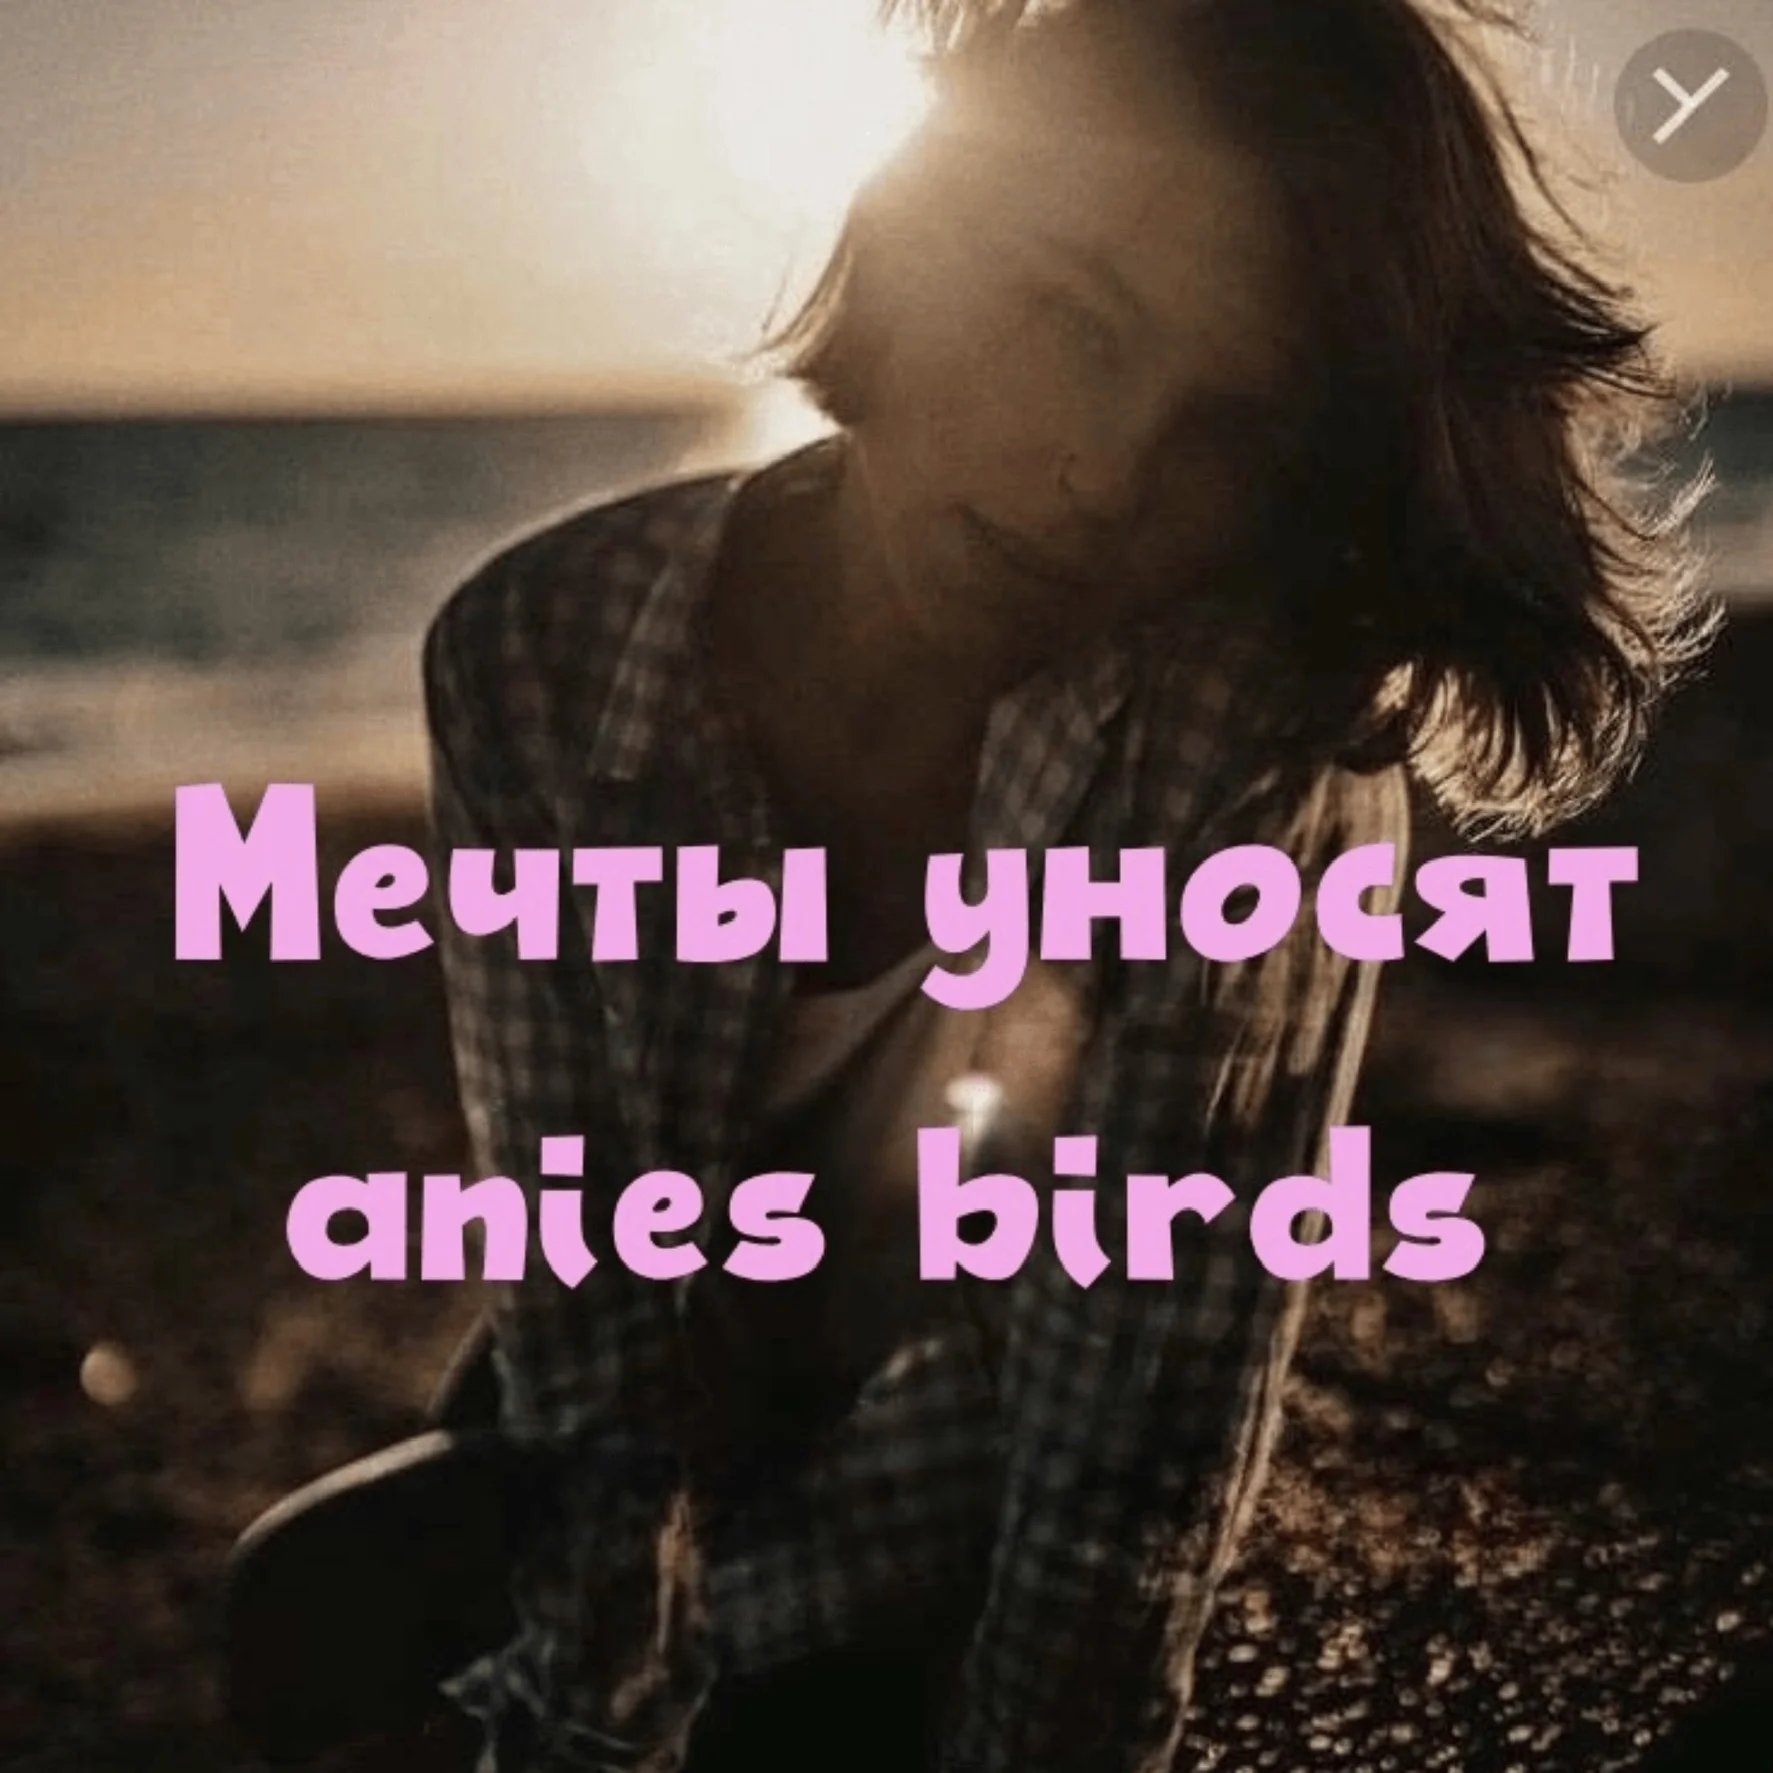 Anies birds 